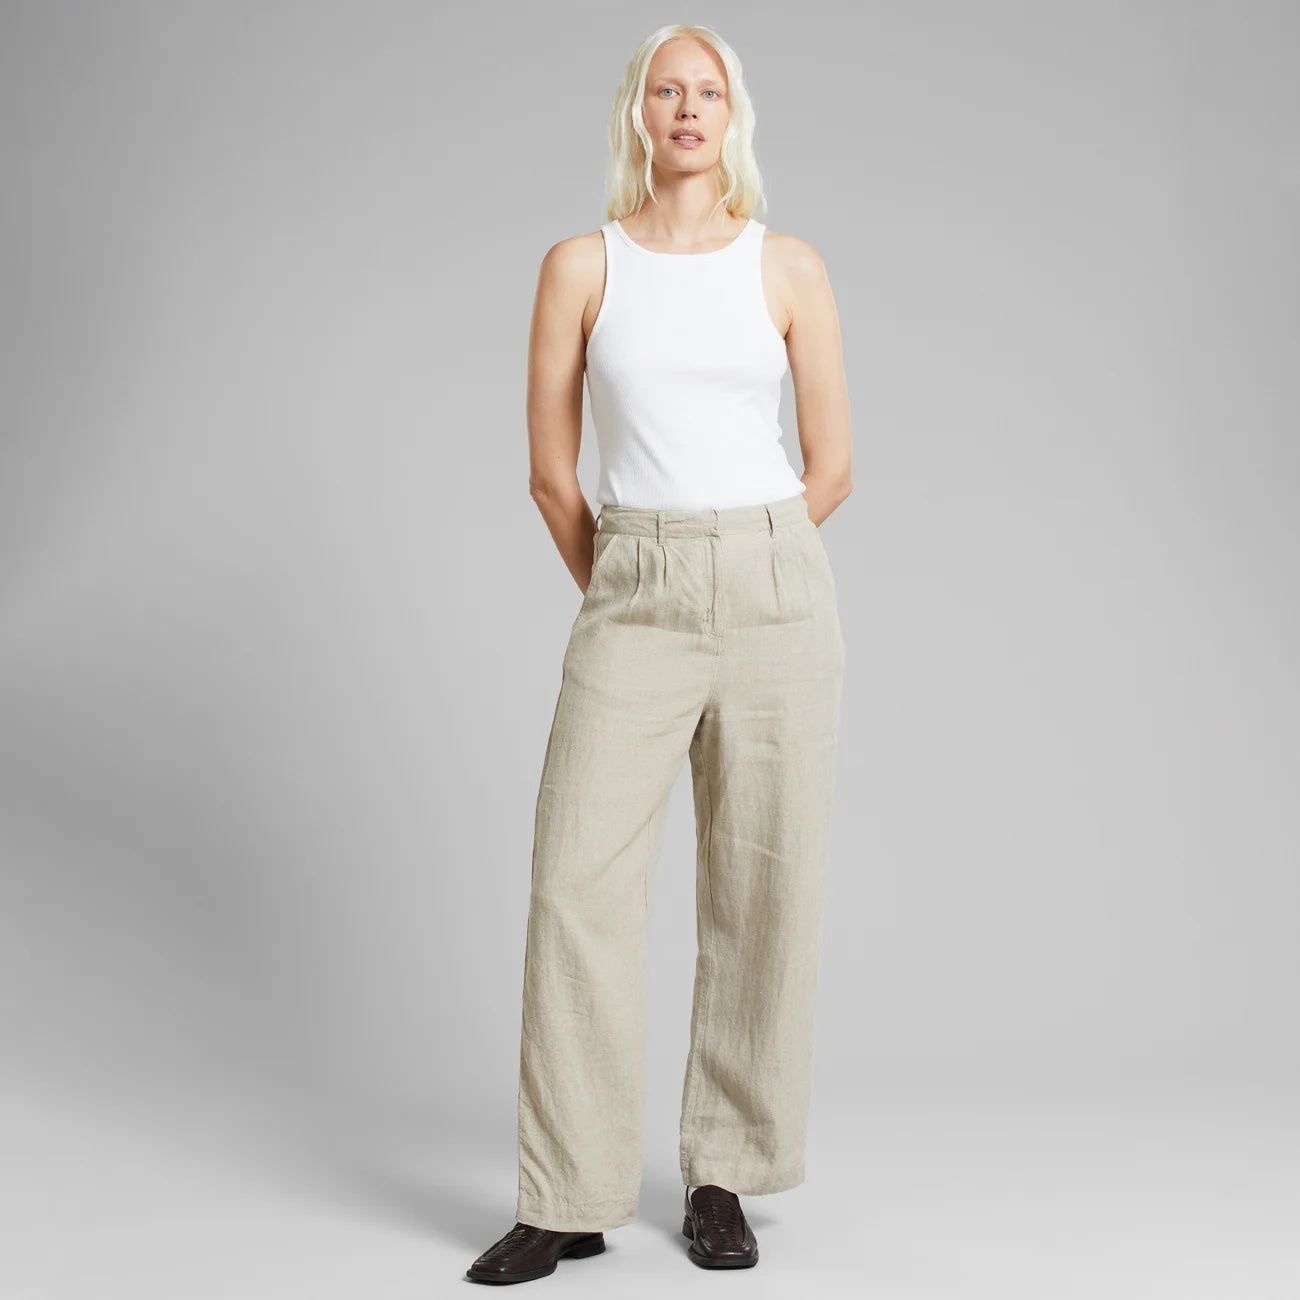 Pants Vickleby Linen Ecru ecru - LEEF mode en accessoires